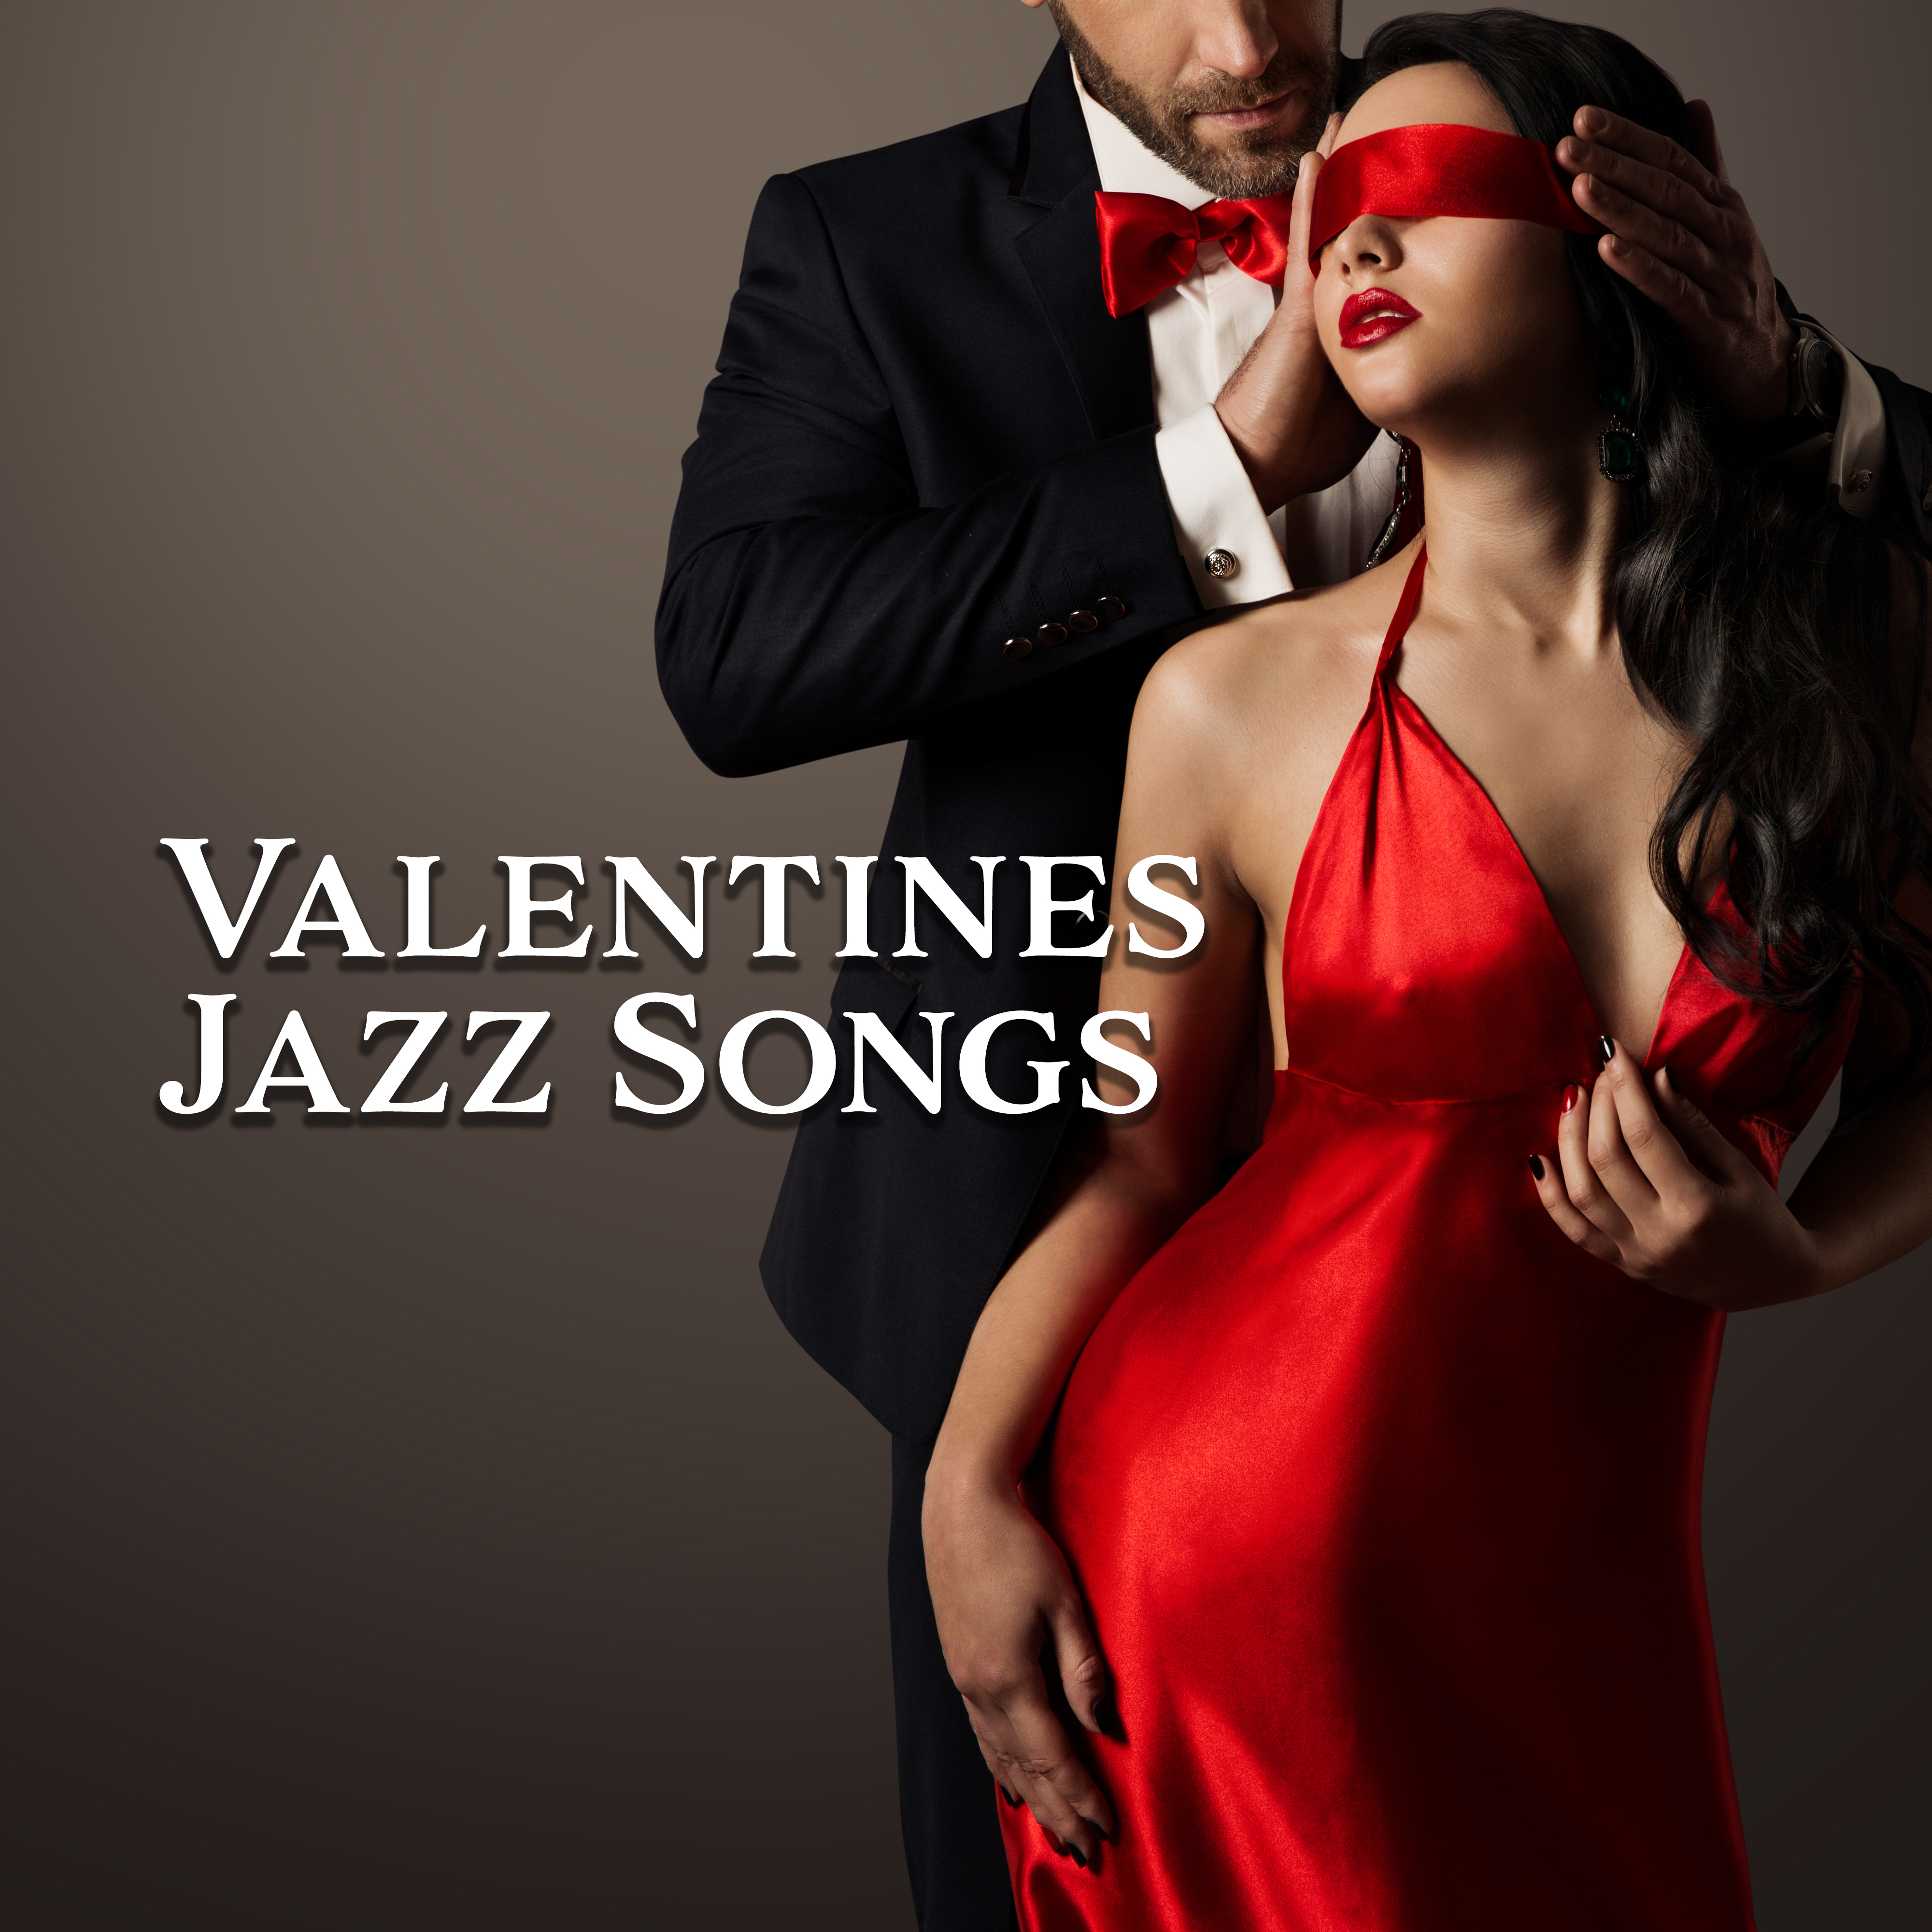 Valentines Jazz Songs  Romantic Jazz Music, Sensual Melodies, Erotic Jazz at Night, Love Songs, Jazz Music Ambient,  Music 2019